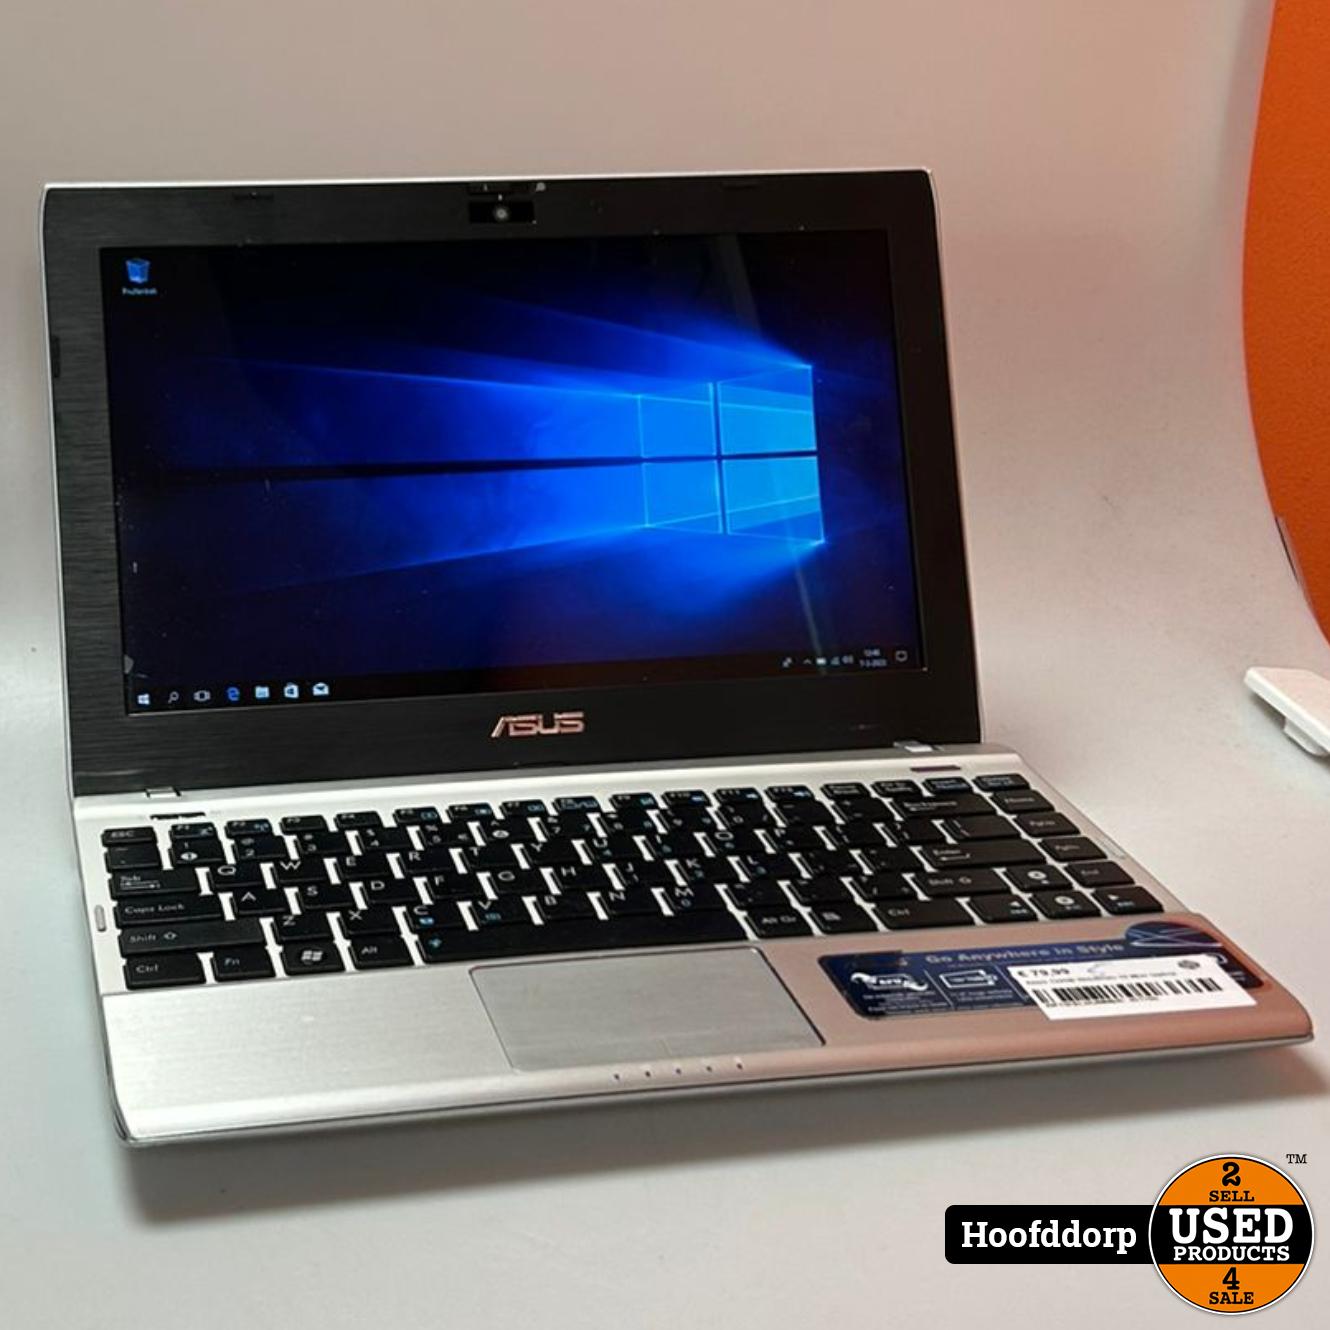 dinsdag Overtreding wijsvinger Asus 1225B Windows 10 Mini laptop - Used Products Hoofddorp